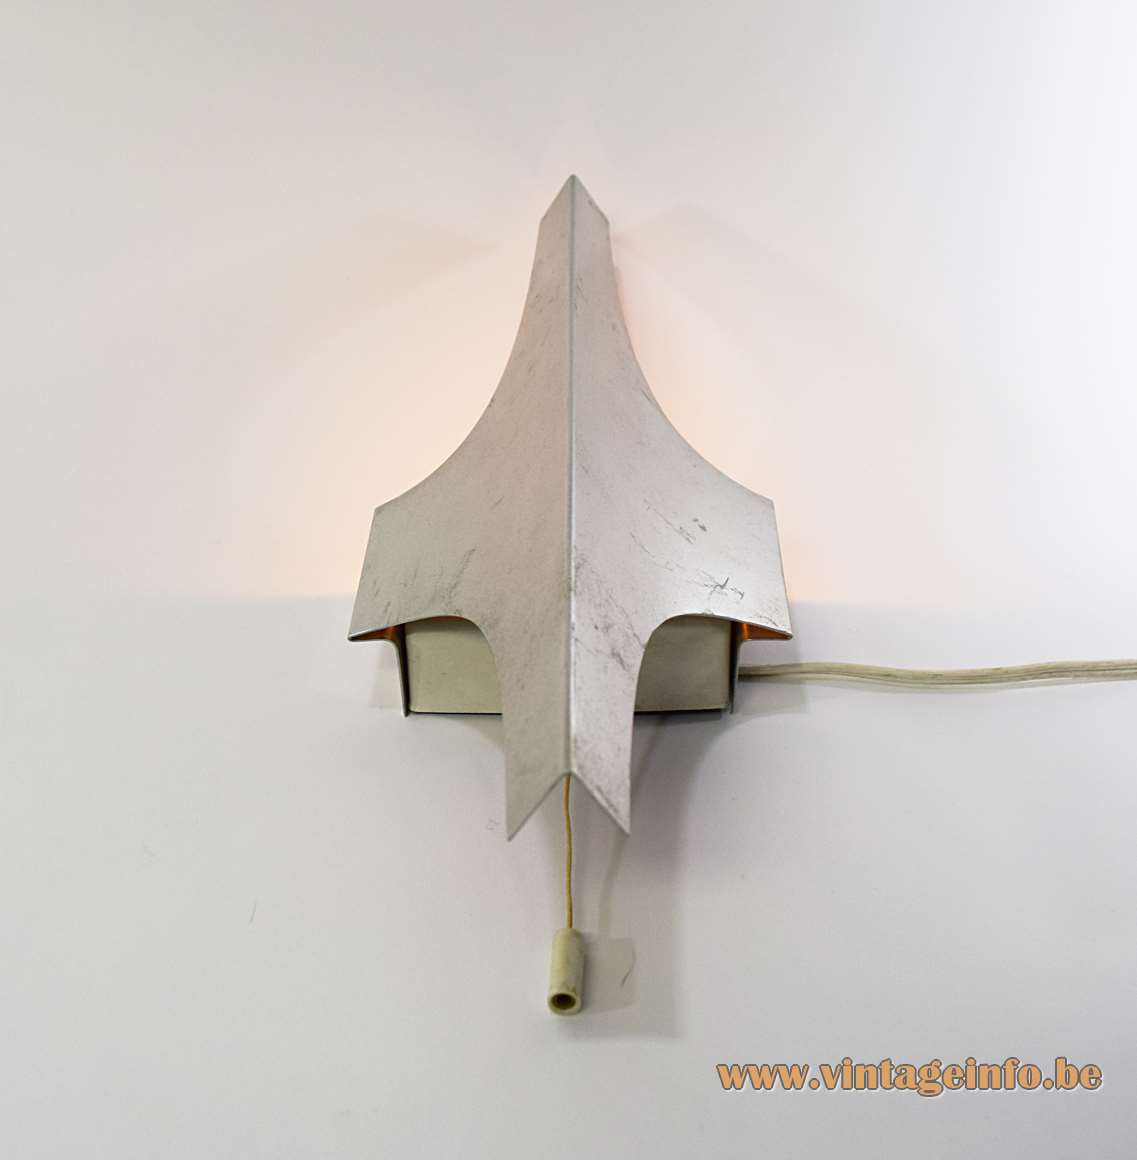 DORIA aluminium wall lamp elongated spiky metal lampshade E14 lamp socket Doria Leuchten Germany 1960s 1970s